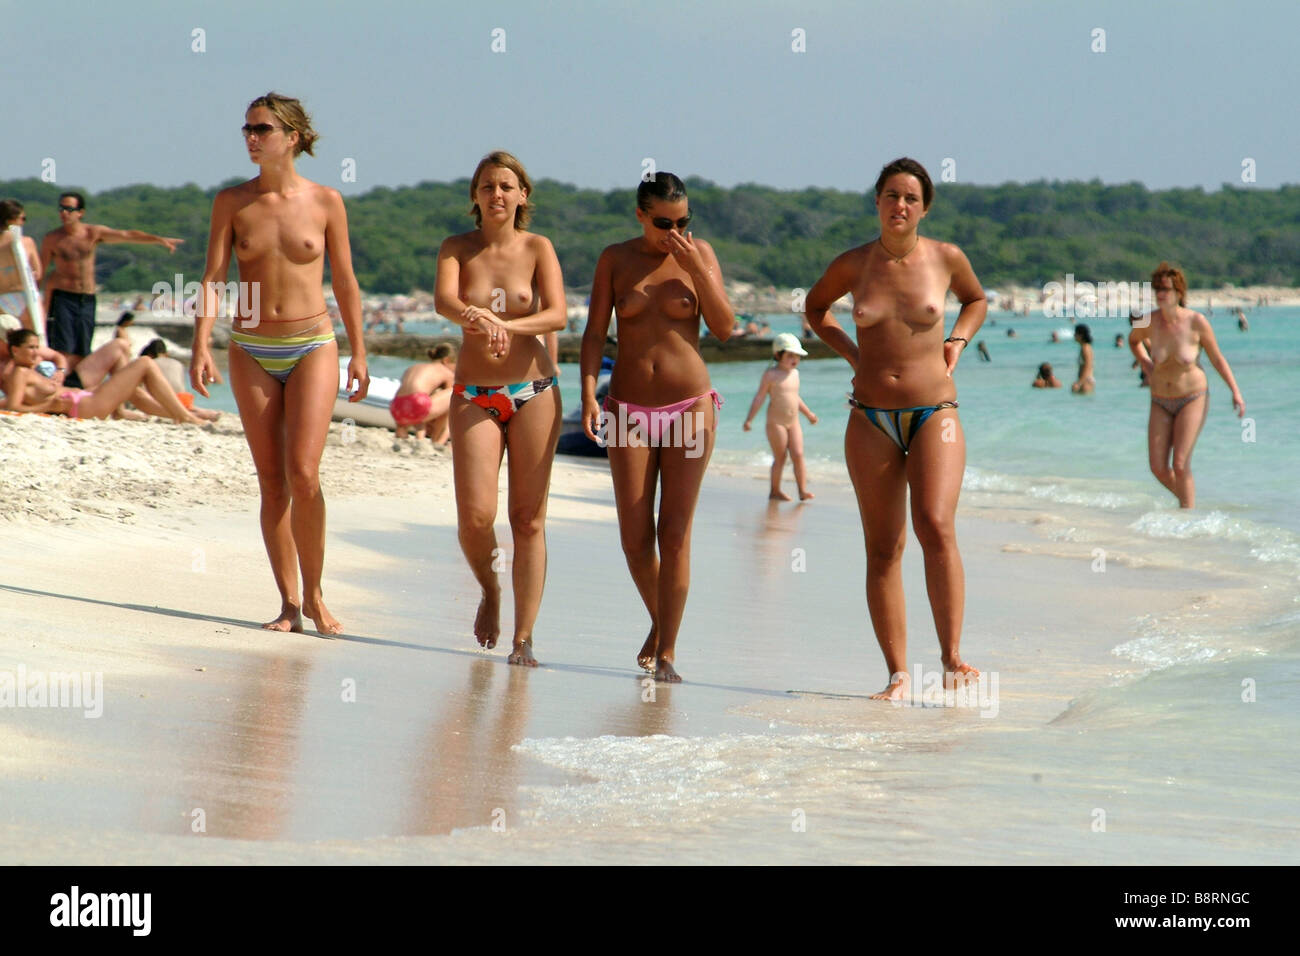 Nudes walking on beach